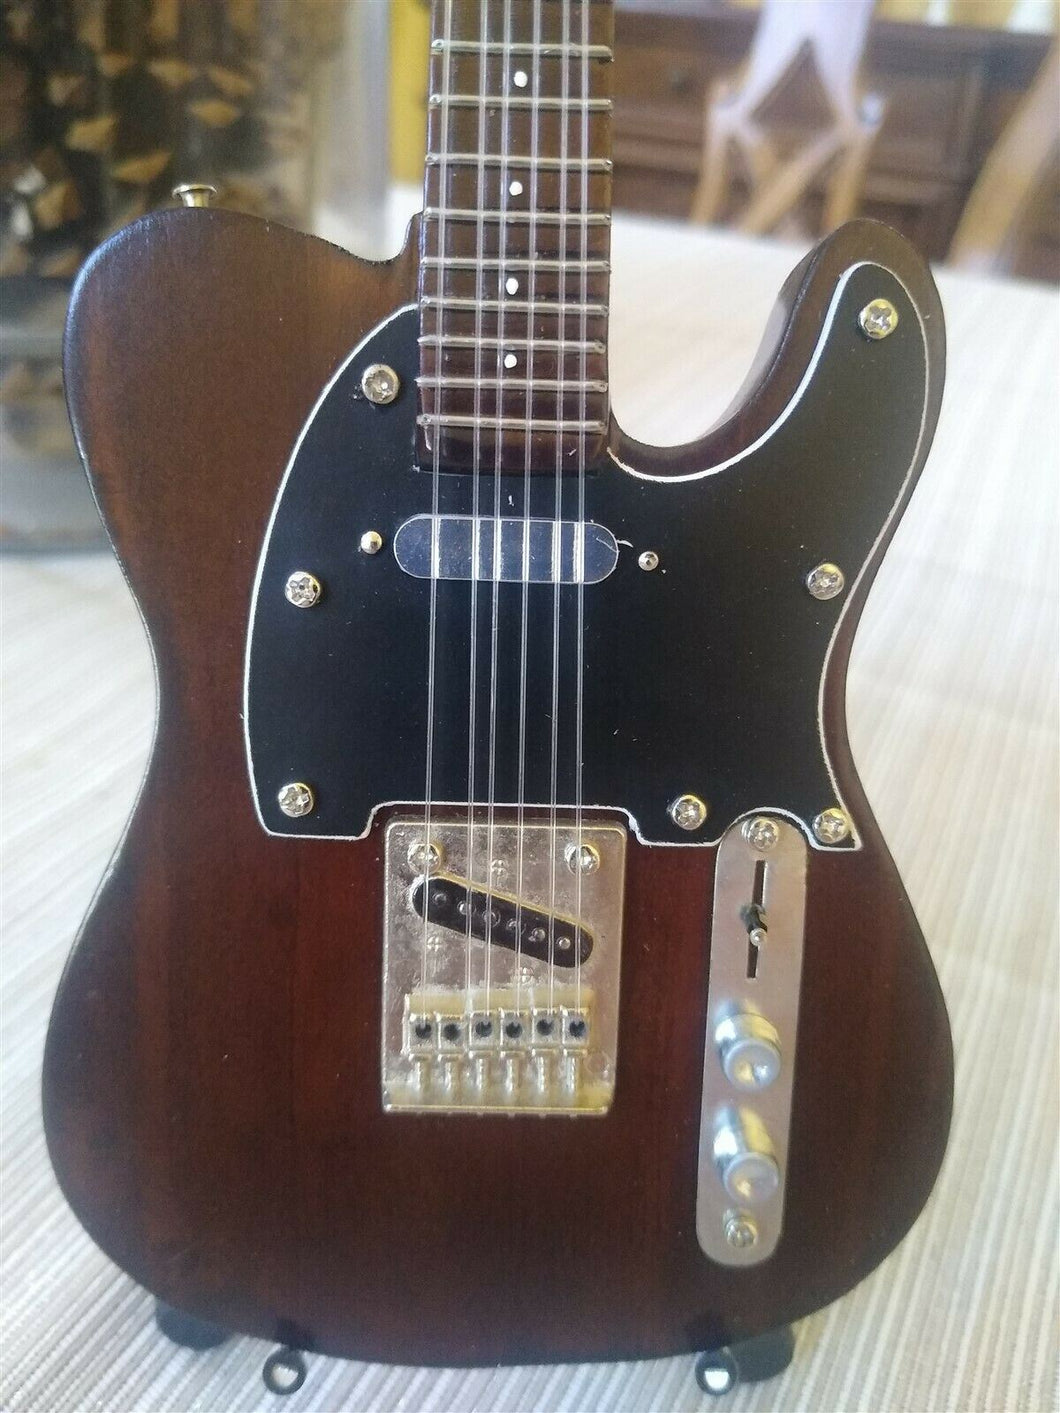 GEORGE HARRISON - Fender Telecaster Rose 1:4 Scale Replica Guitar ~Axe Heaven~